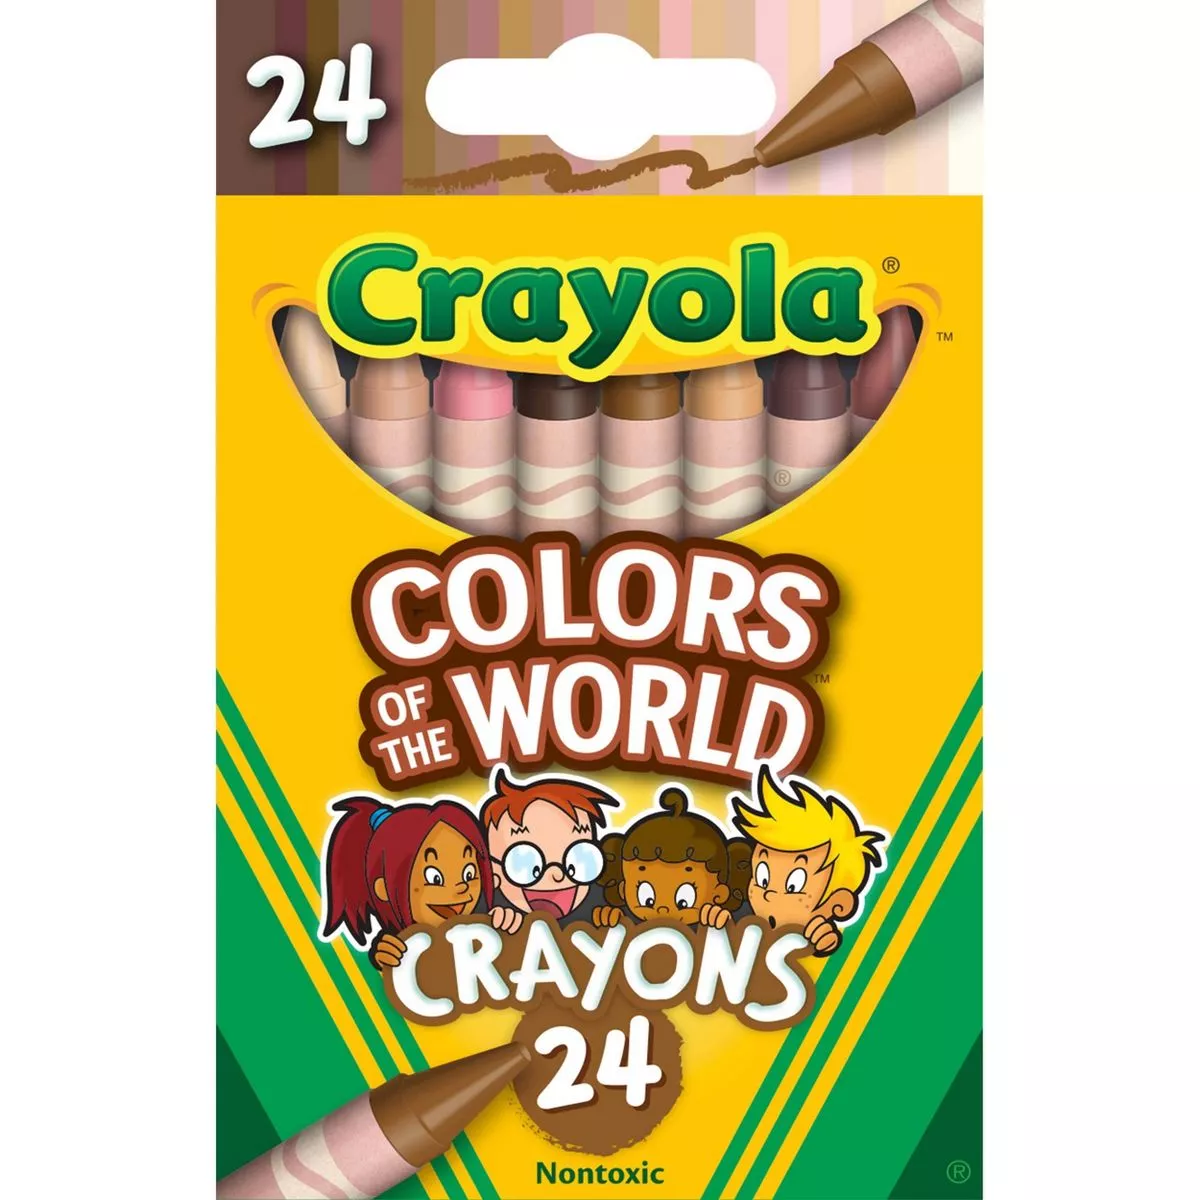 Crayola 53pc Silly Scents Mini Art Case